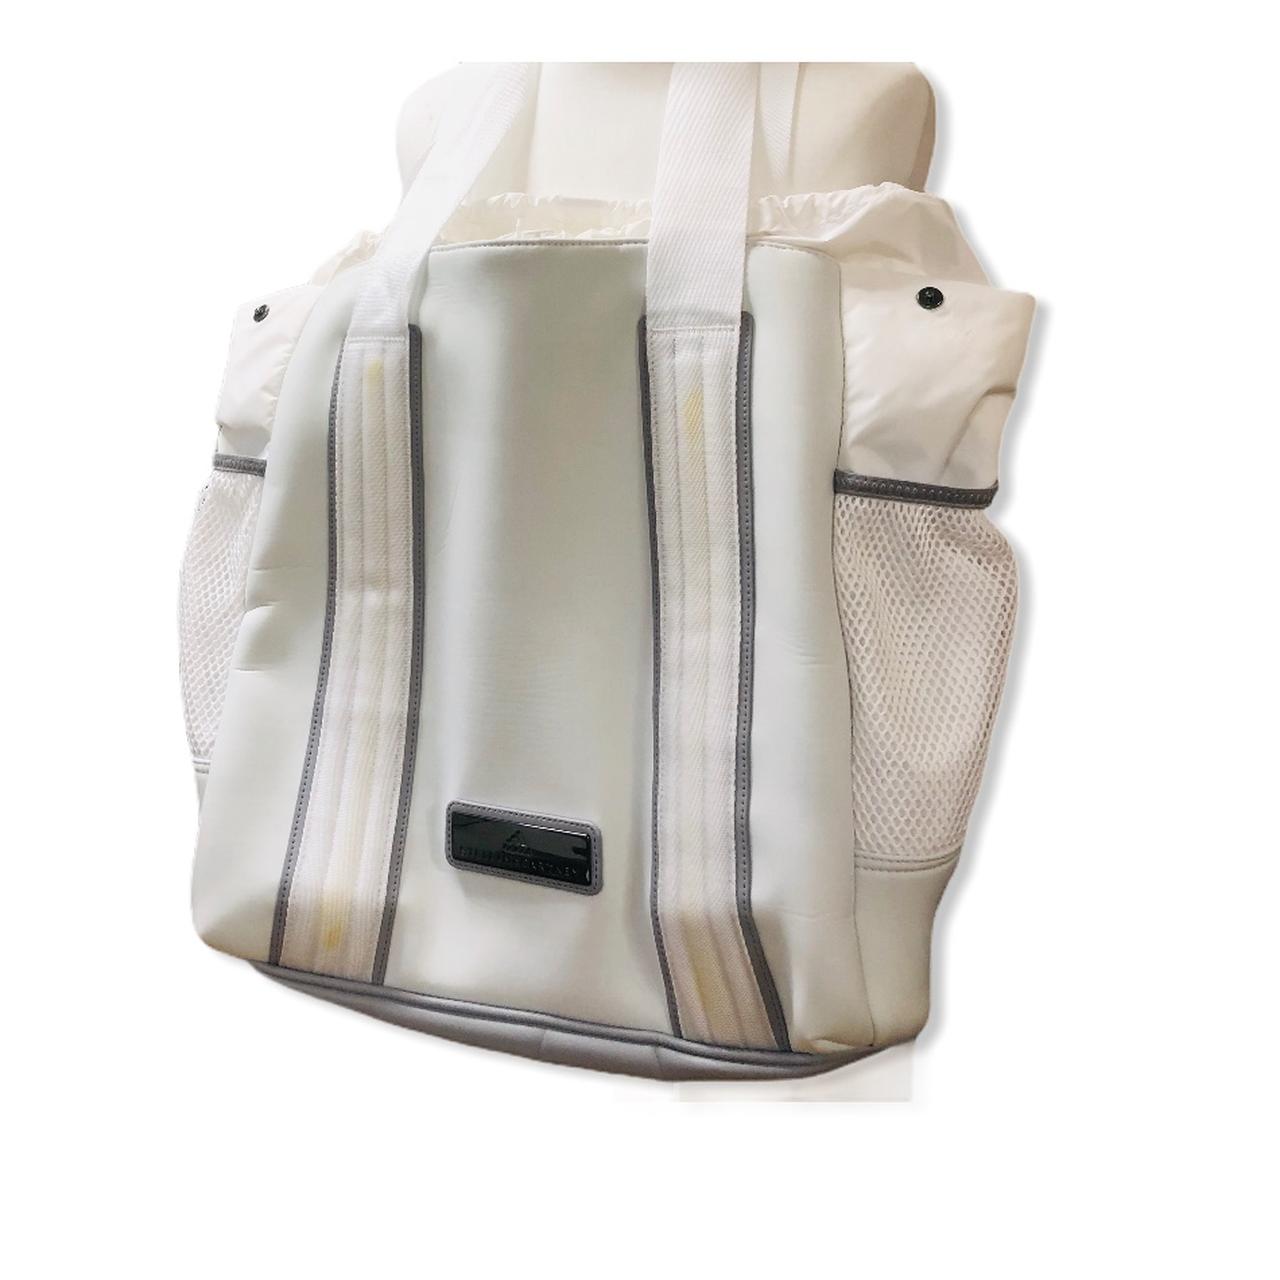 Stella McCartney for adidas Stella McCartney for Adidas Large Tennis Bag -  White Shoulder Bags, Handbags - W5S24859 | The RealReal